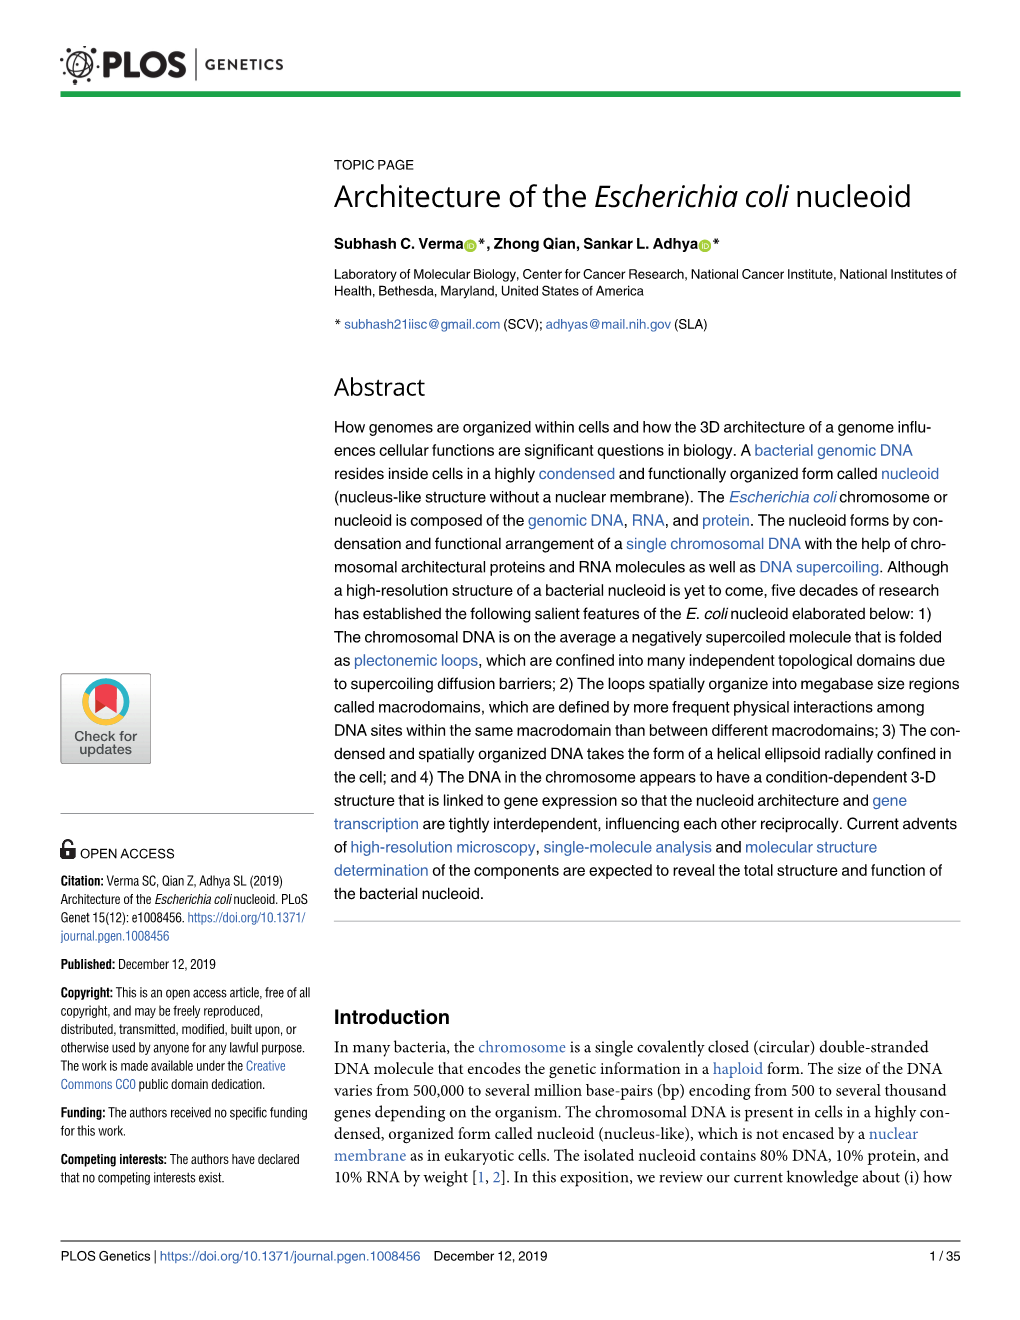 Architecture of the Escherichia Coli Nucleoid